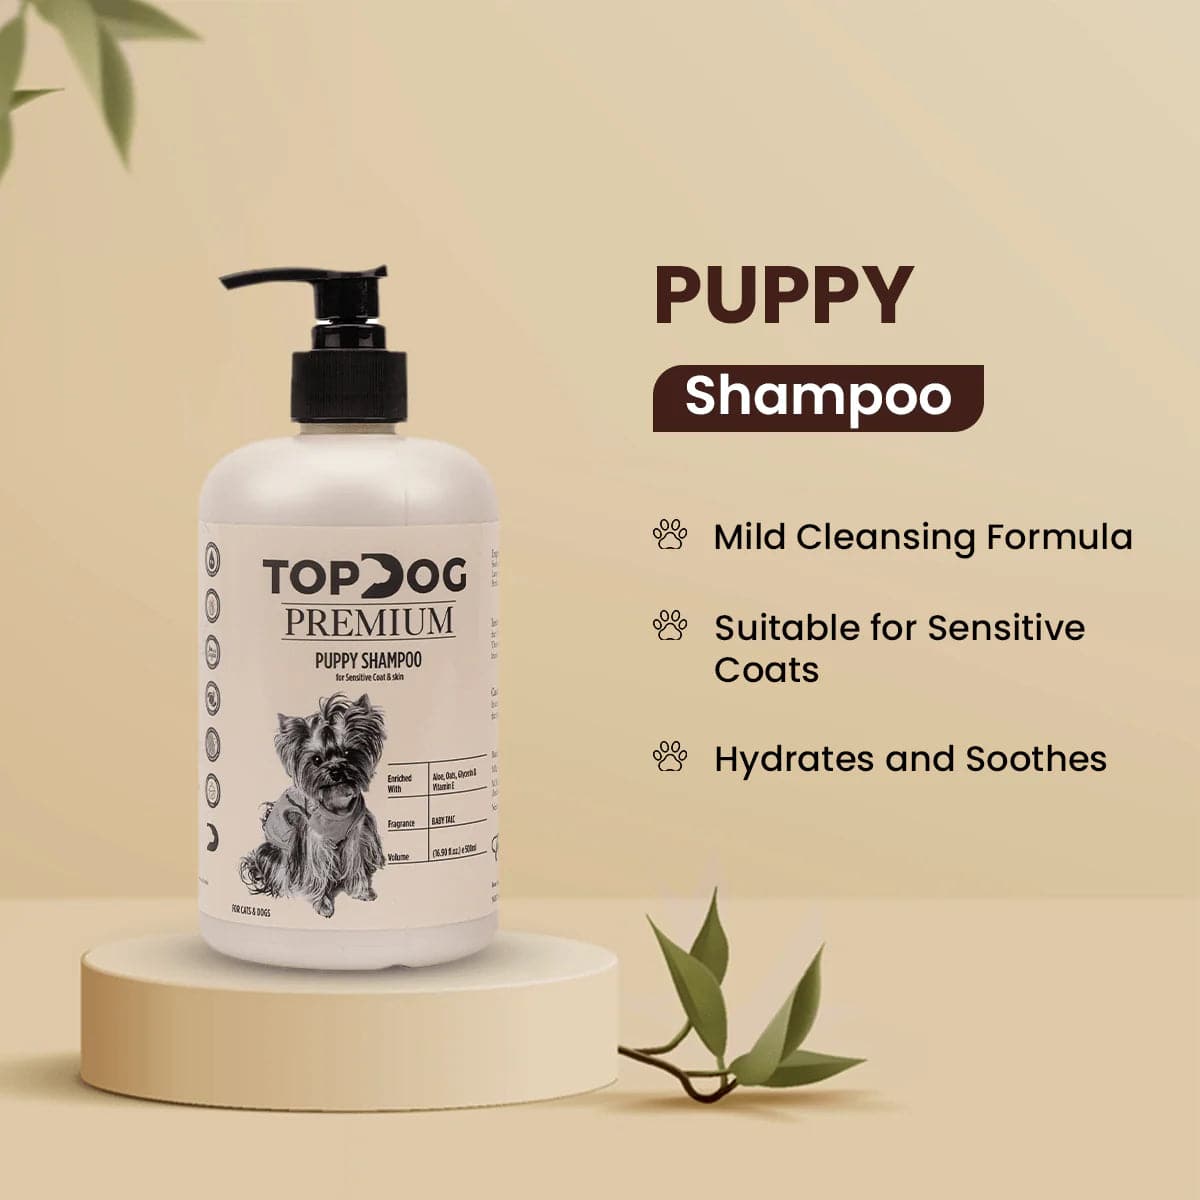 TopDog Premium Puppy Shampoo